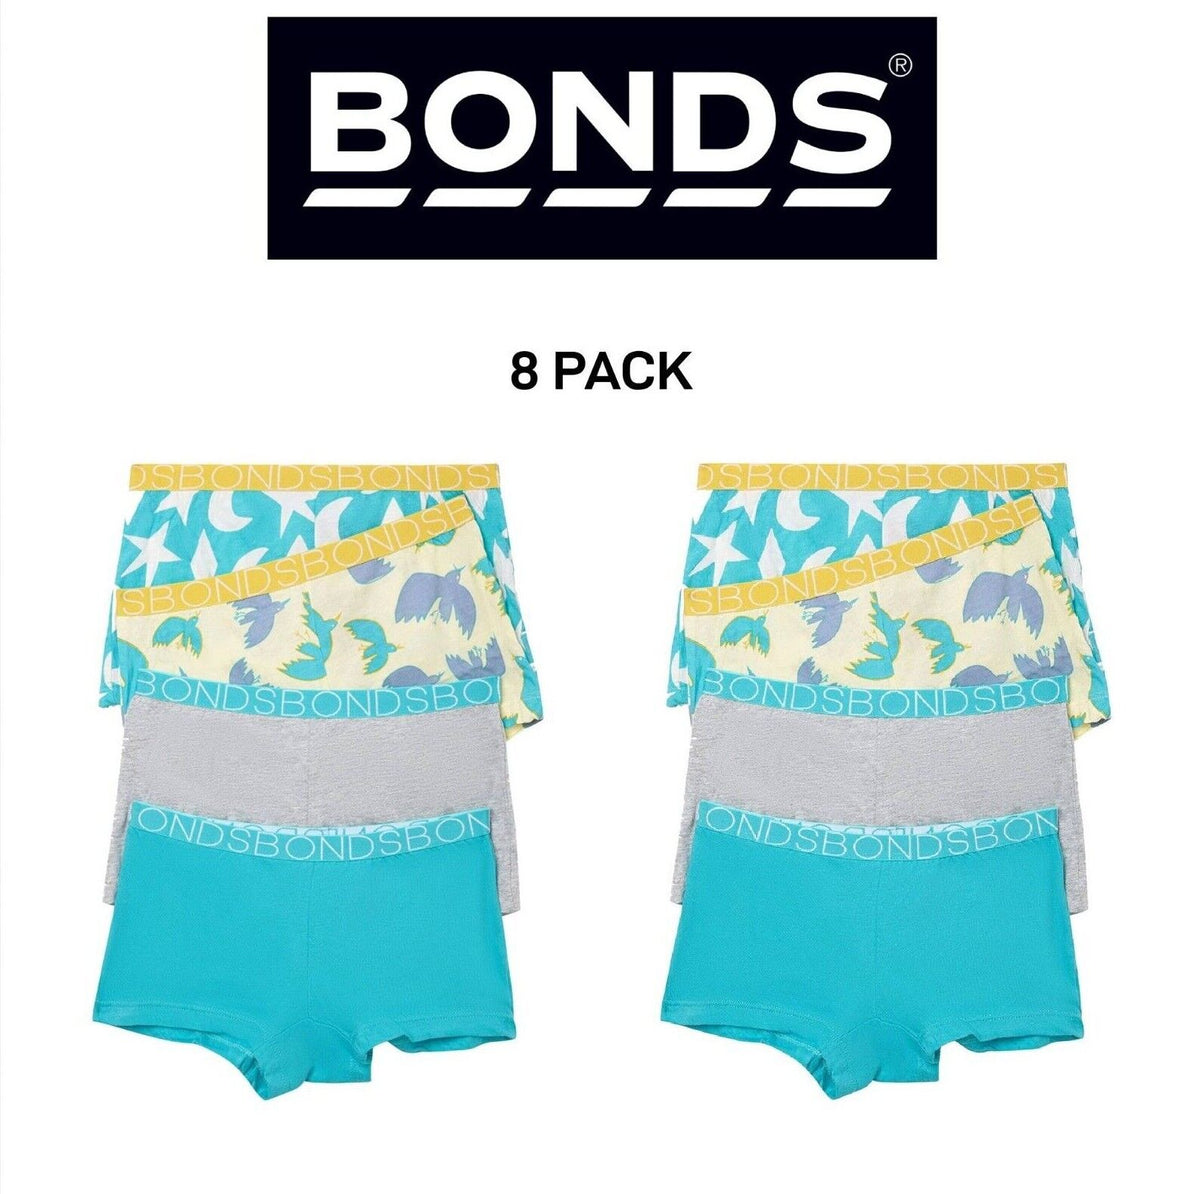 Bonds Girls Shortie Full Coverage Modesty Ultimate Soft Waistband 8 Pack UWCA4A